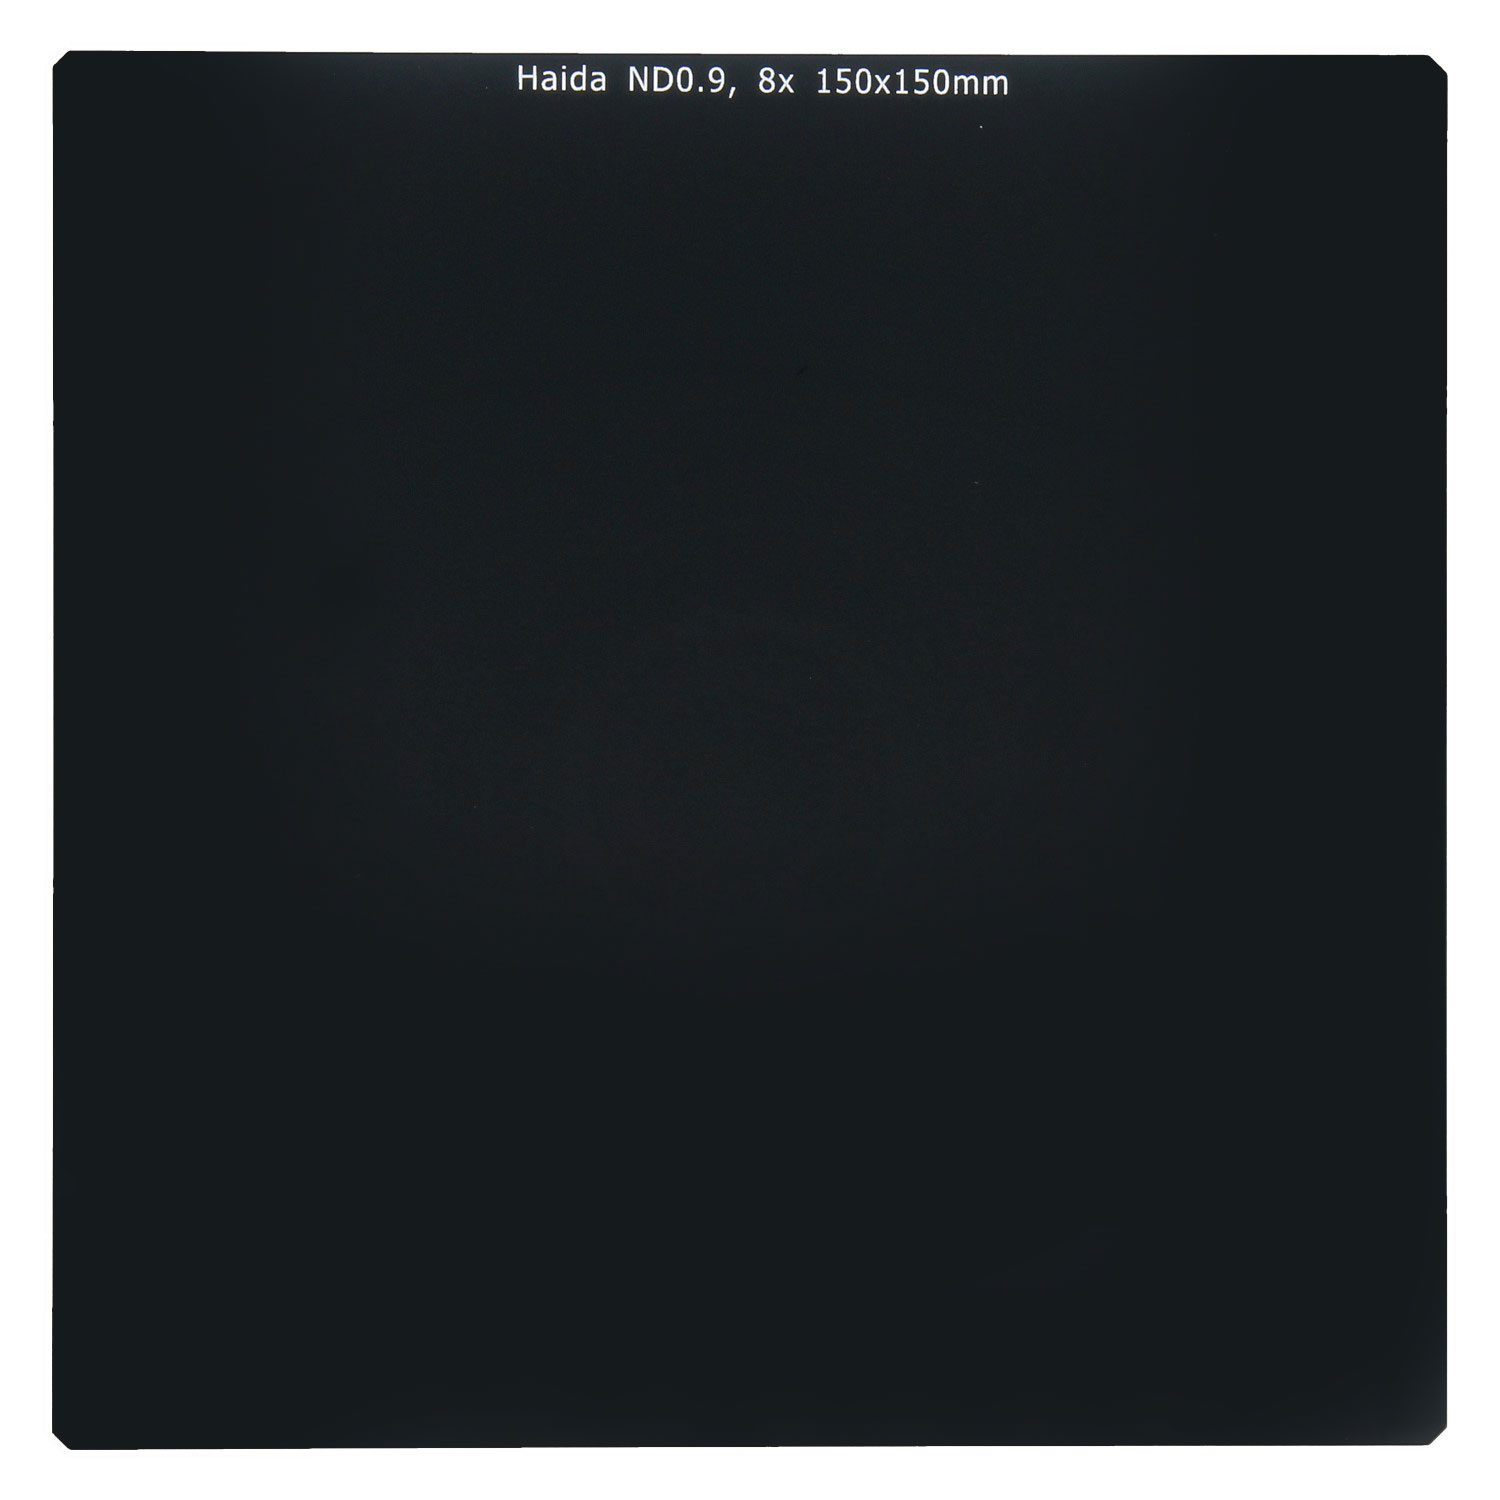 Image of Haida ND0.9 Optical Glass Filter 150x150mm